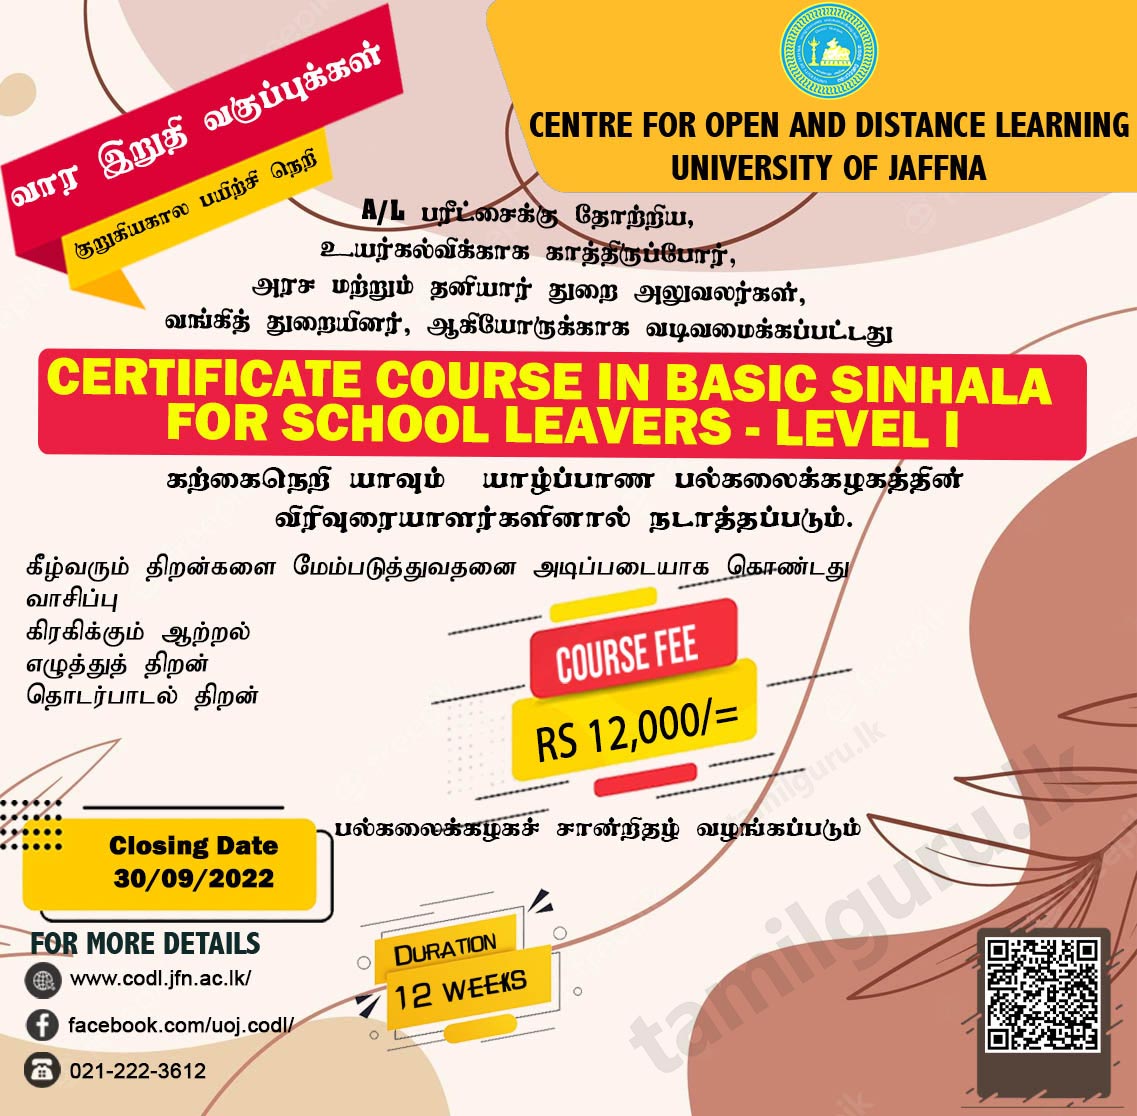 Short Course in Basic Sinhala for School Leavers Level 1 (Batch 2) (2022) - University of Jaffna - Application